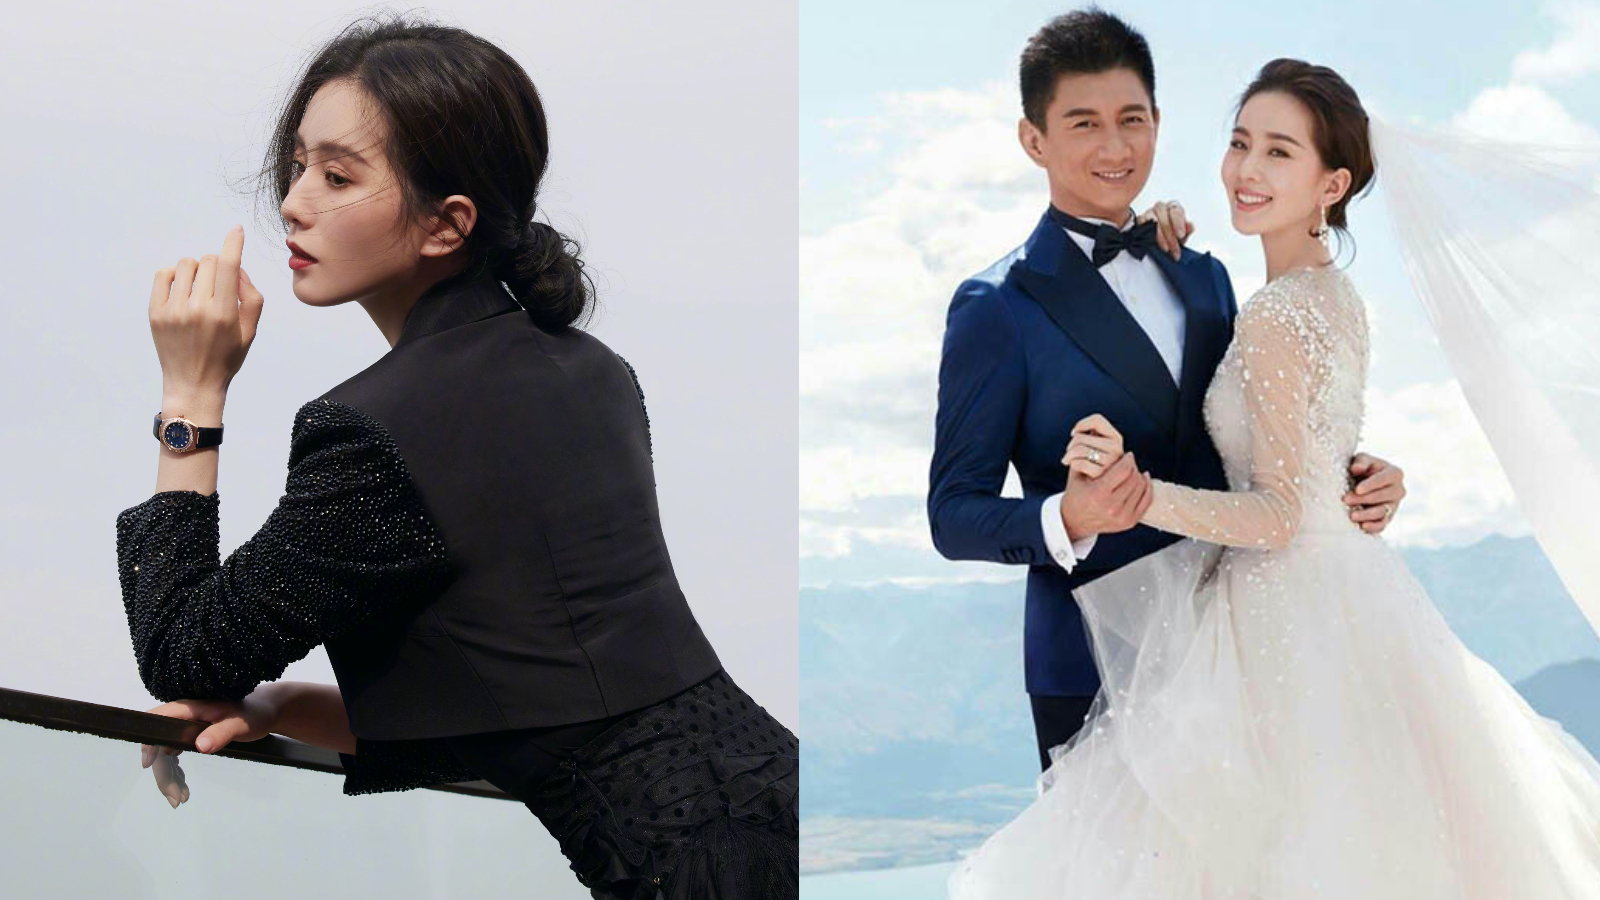 Liu Shishi and Nicky Wu's Wedding Pictures are Revealed! – cdramadevotee